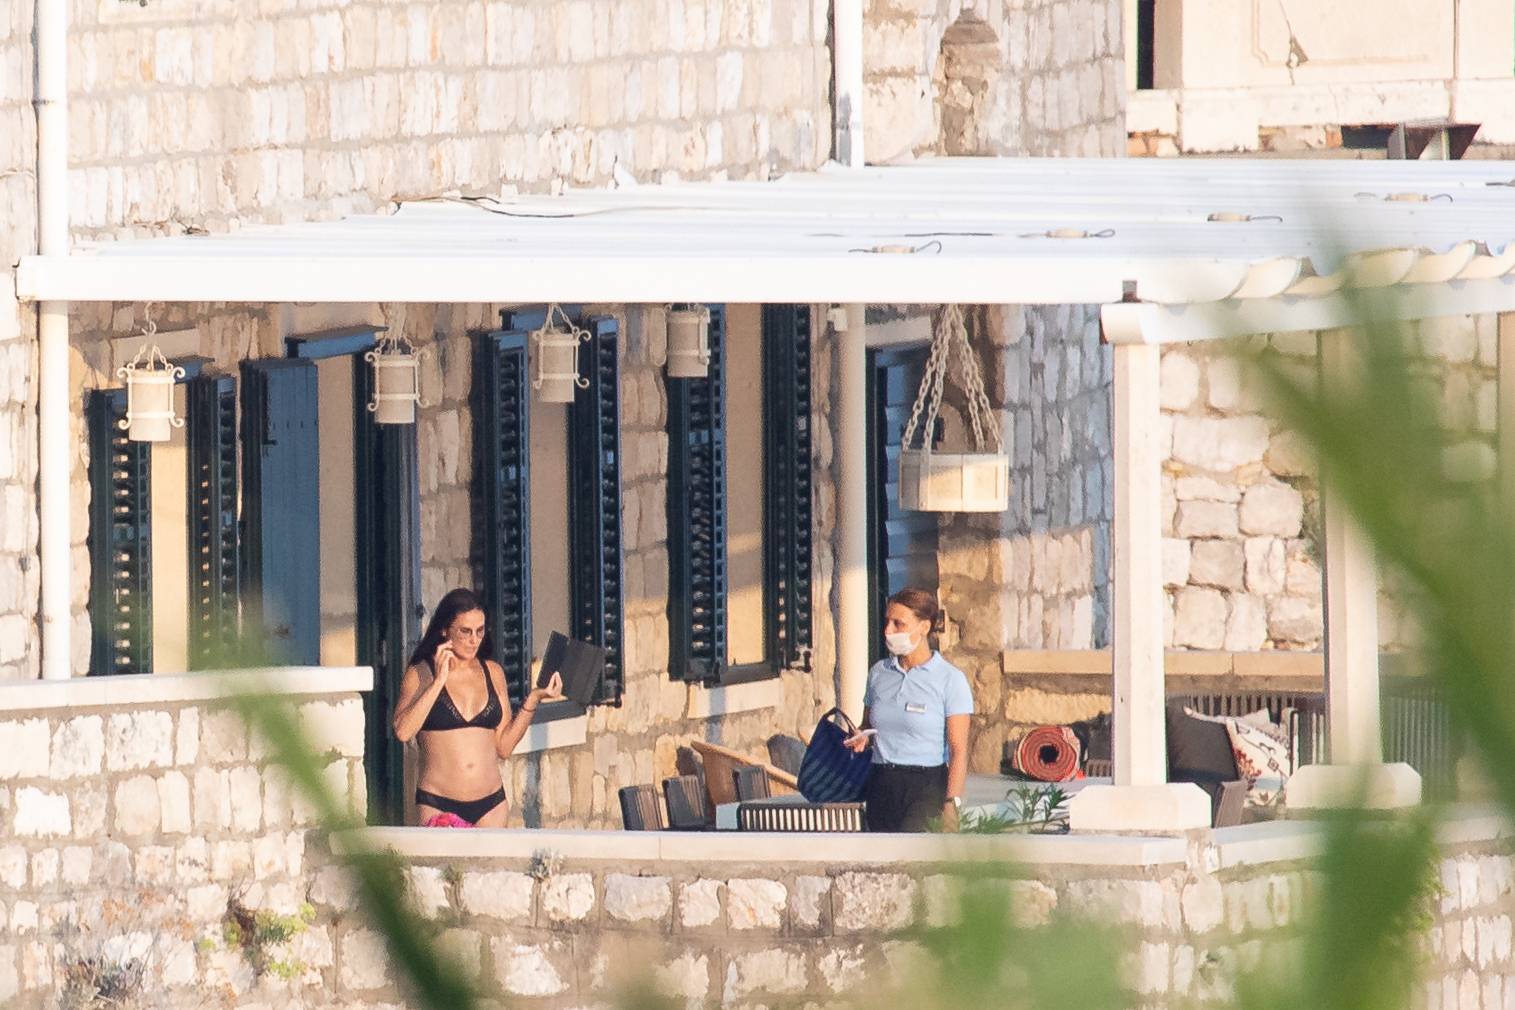 Ekskluzivne fotke Demi Moore: U Dubrovniku uživa u vili, blizu je 60., ali je i dalje 'bomba'